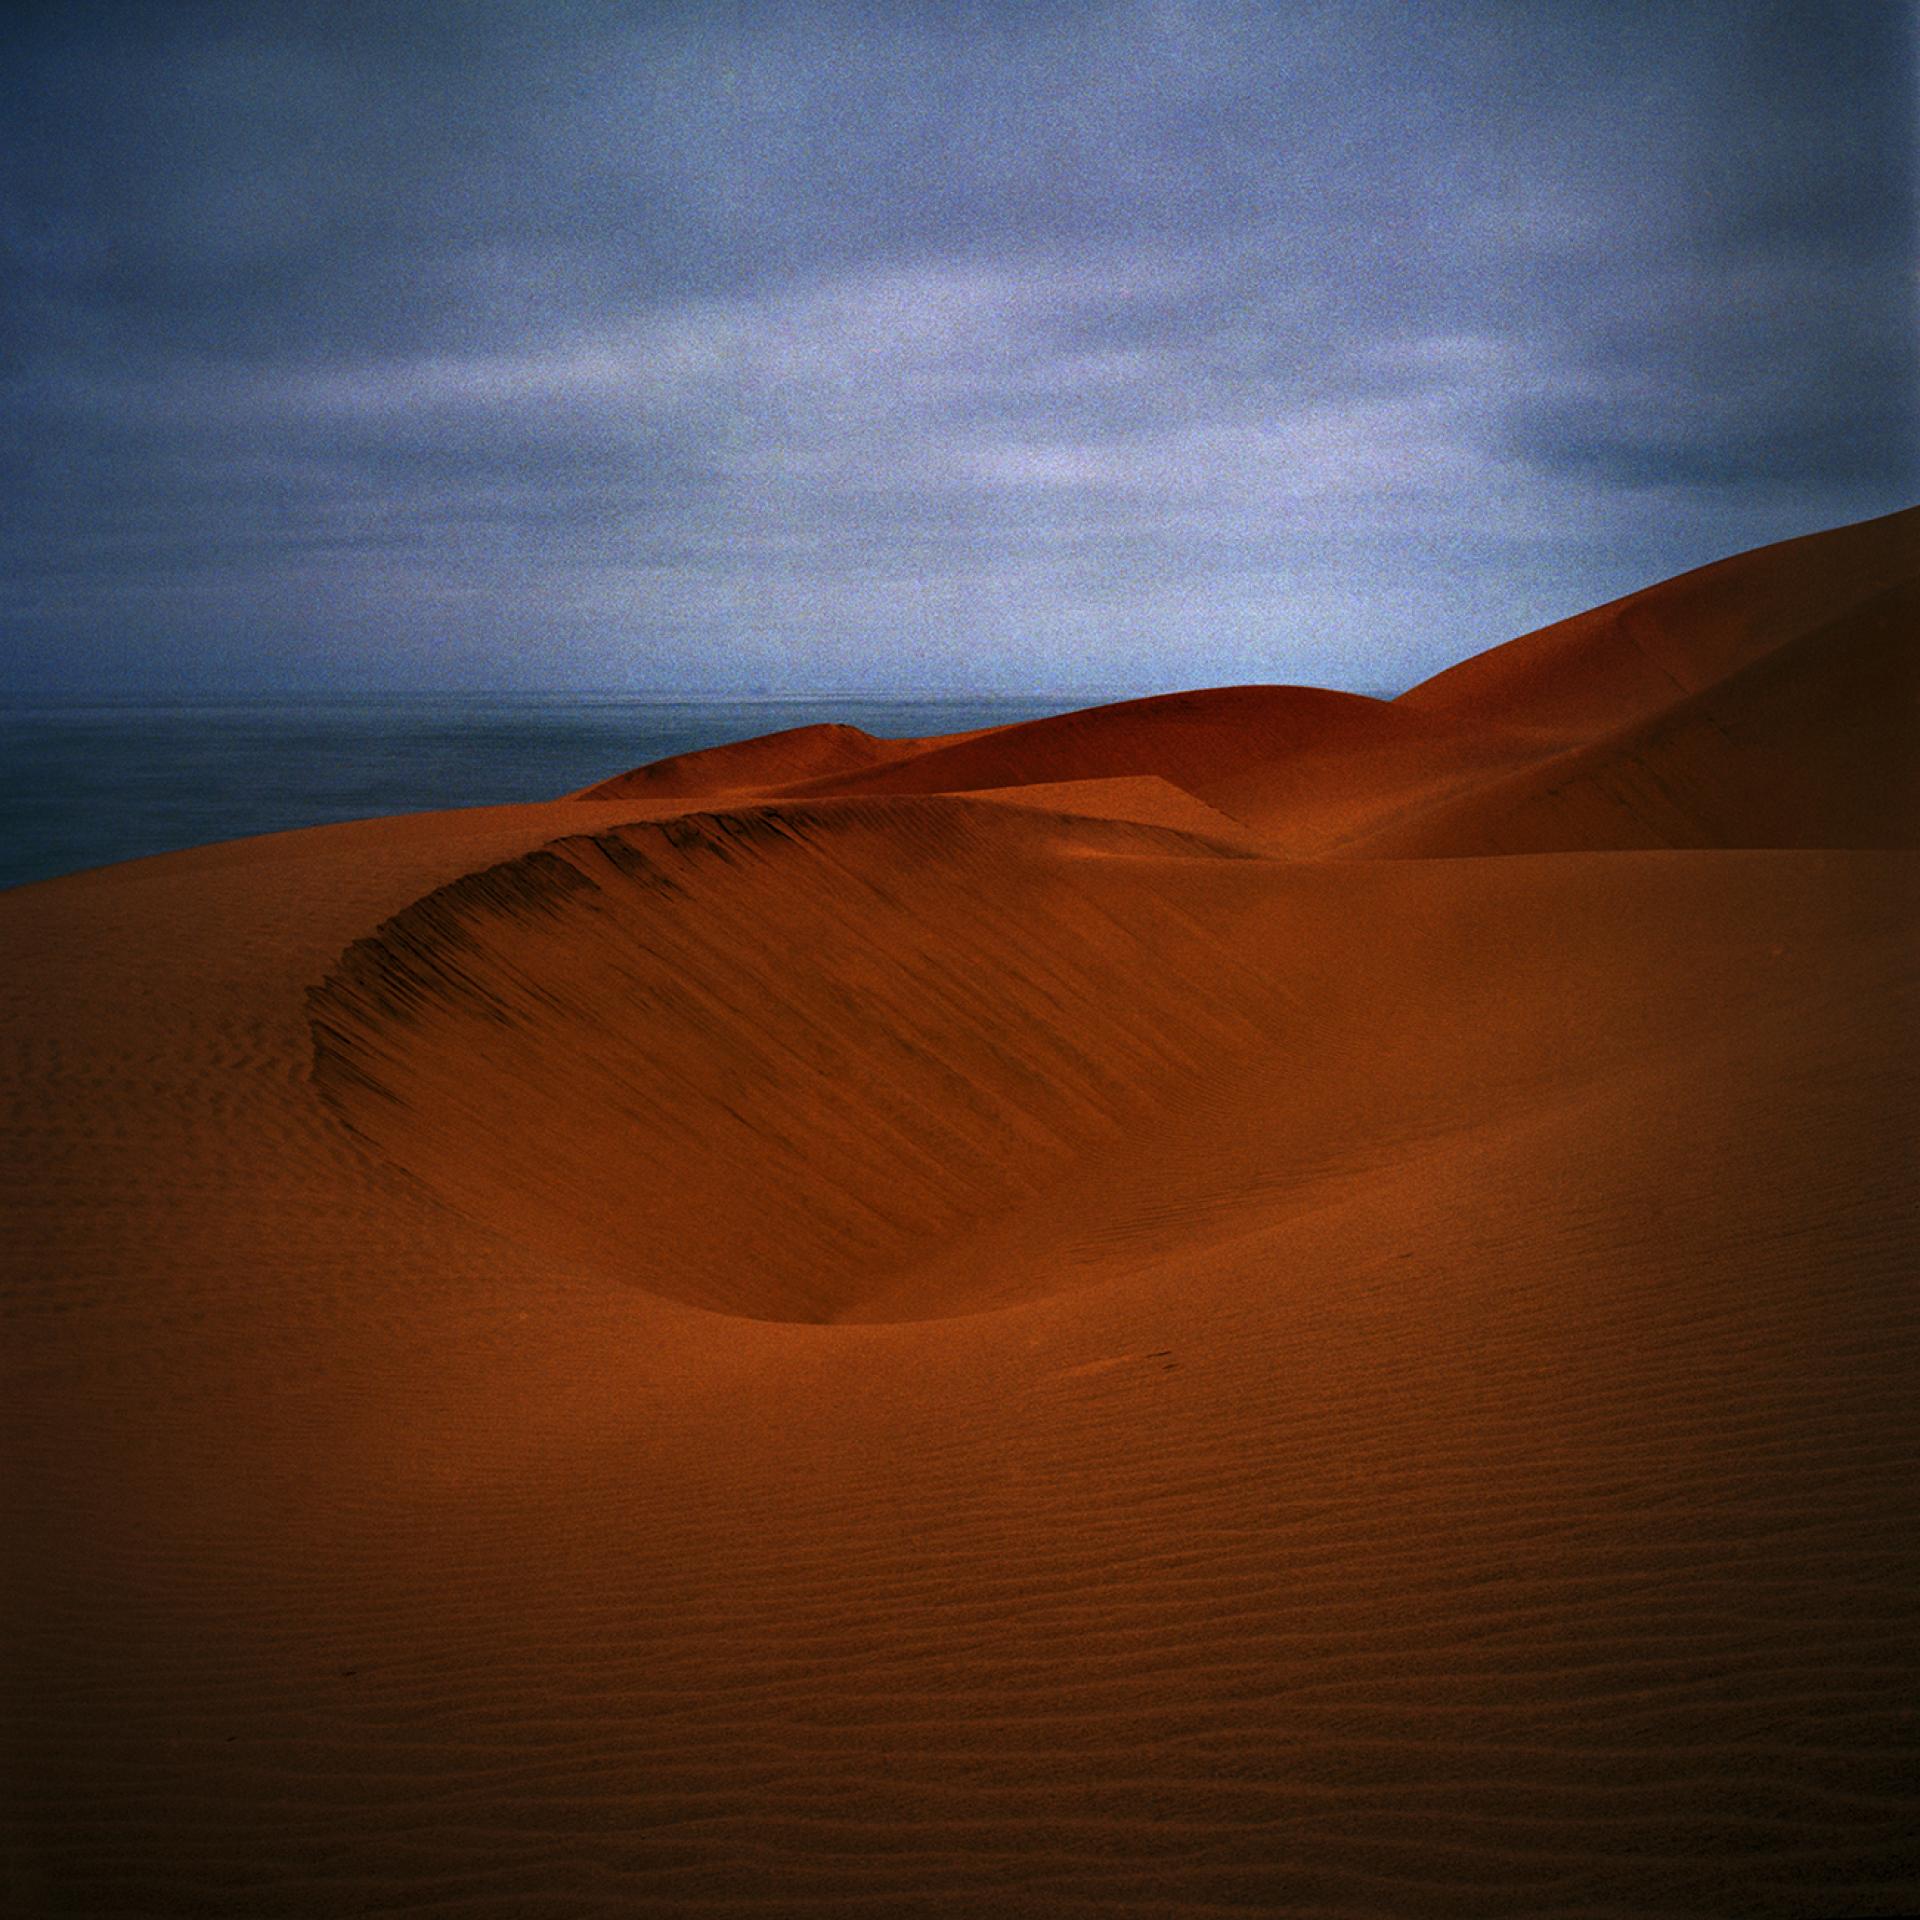 New York Photography Awards Winner - Deserts of Namibia